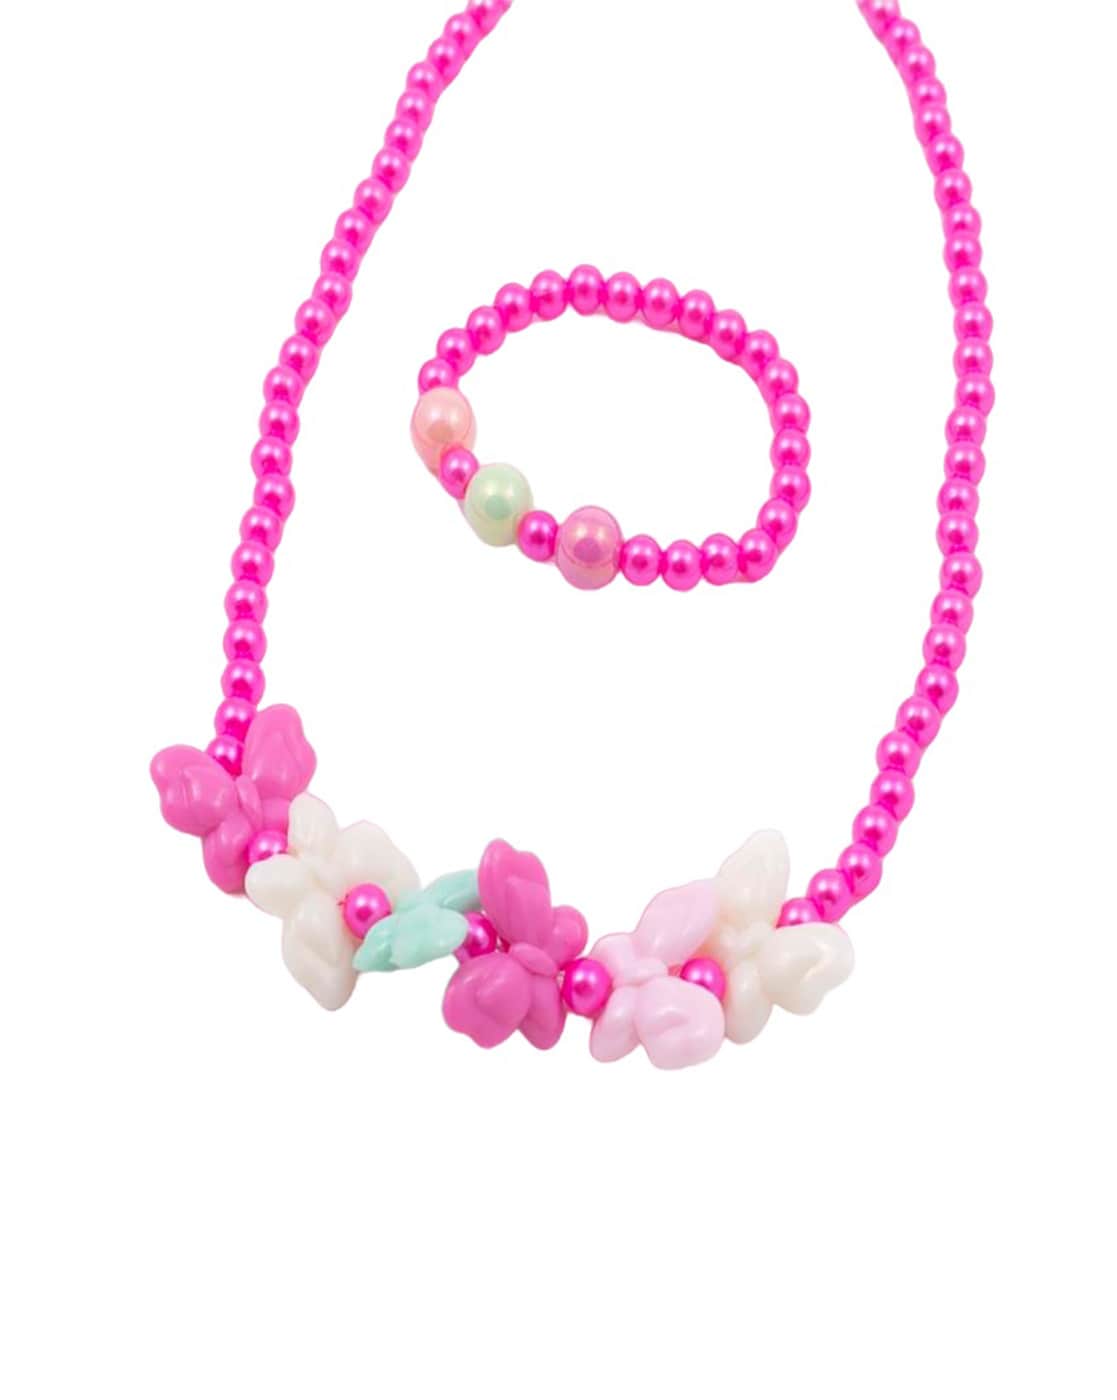 1 Carat Natural Rose Cut Diamond Necklace, Earrings and Bracelet Set